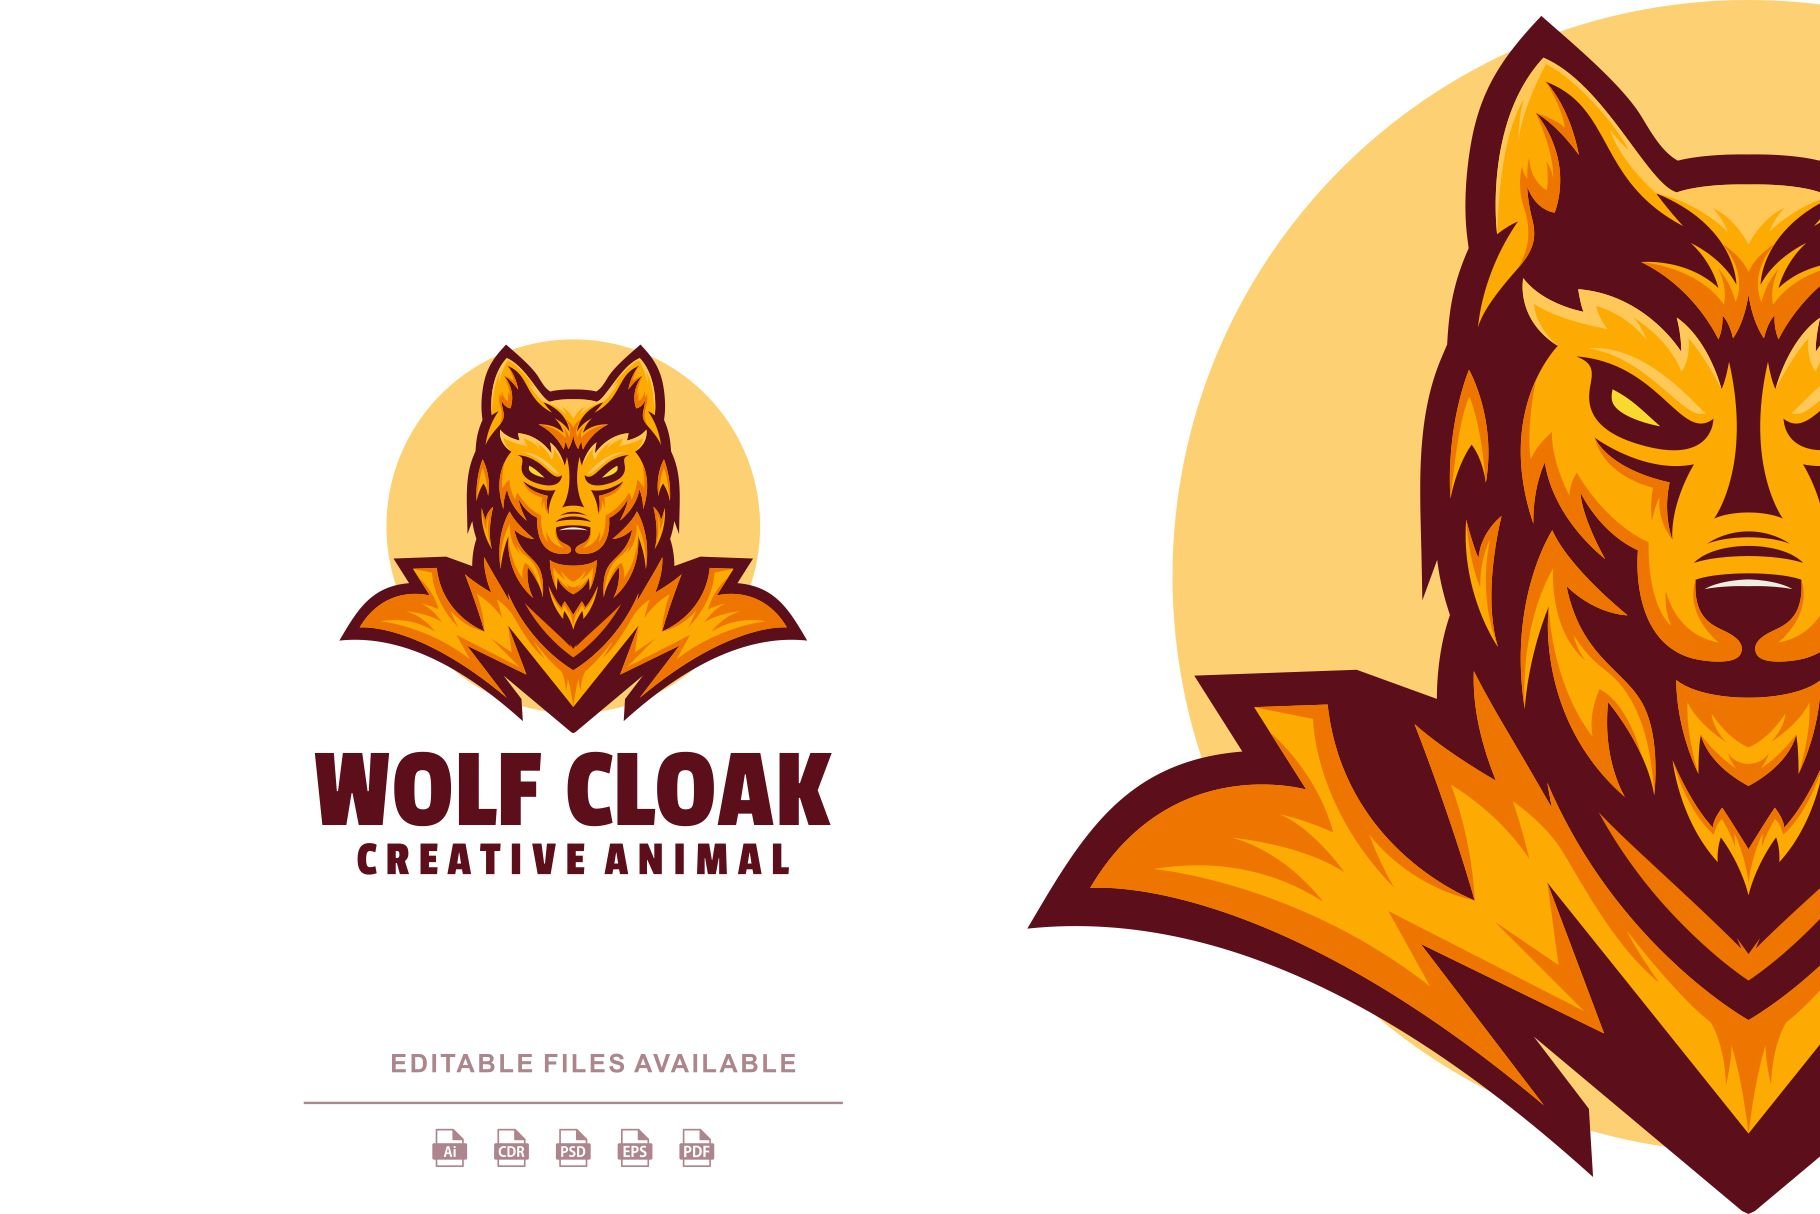 Wolf Cloak Color Mascot Logo cover image.